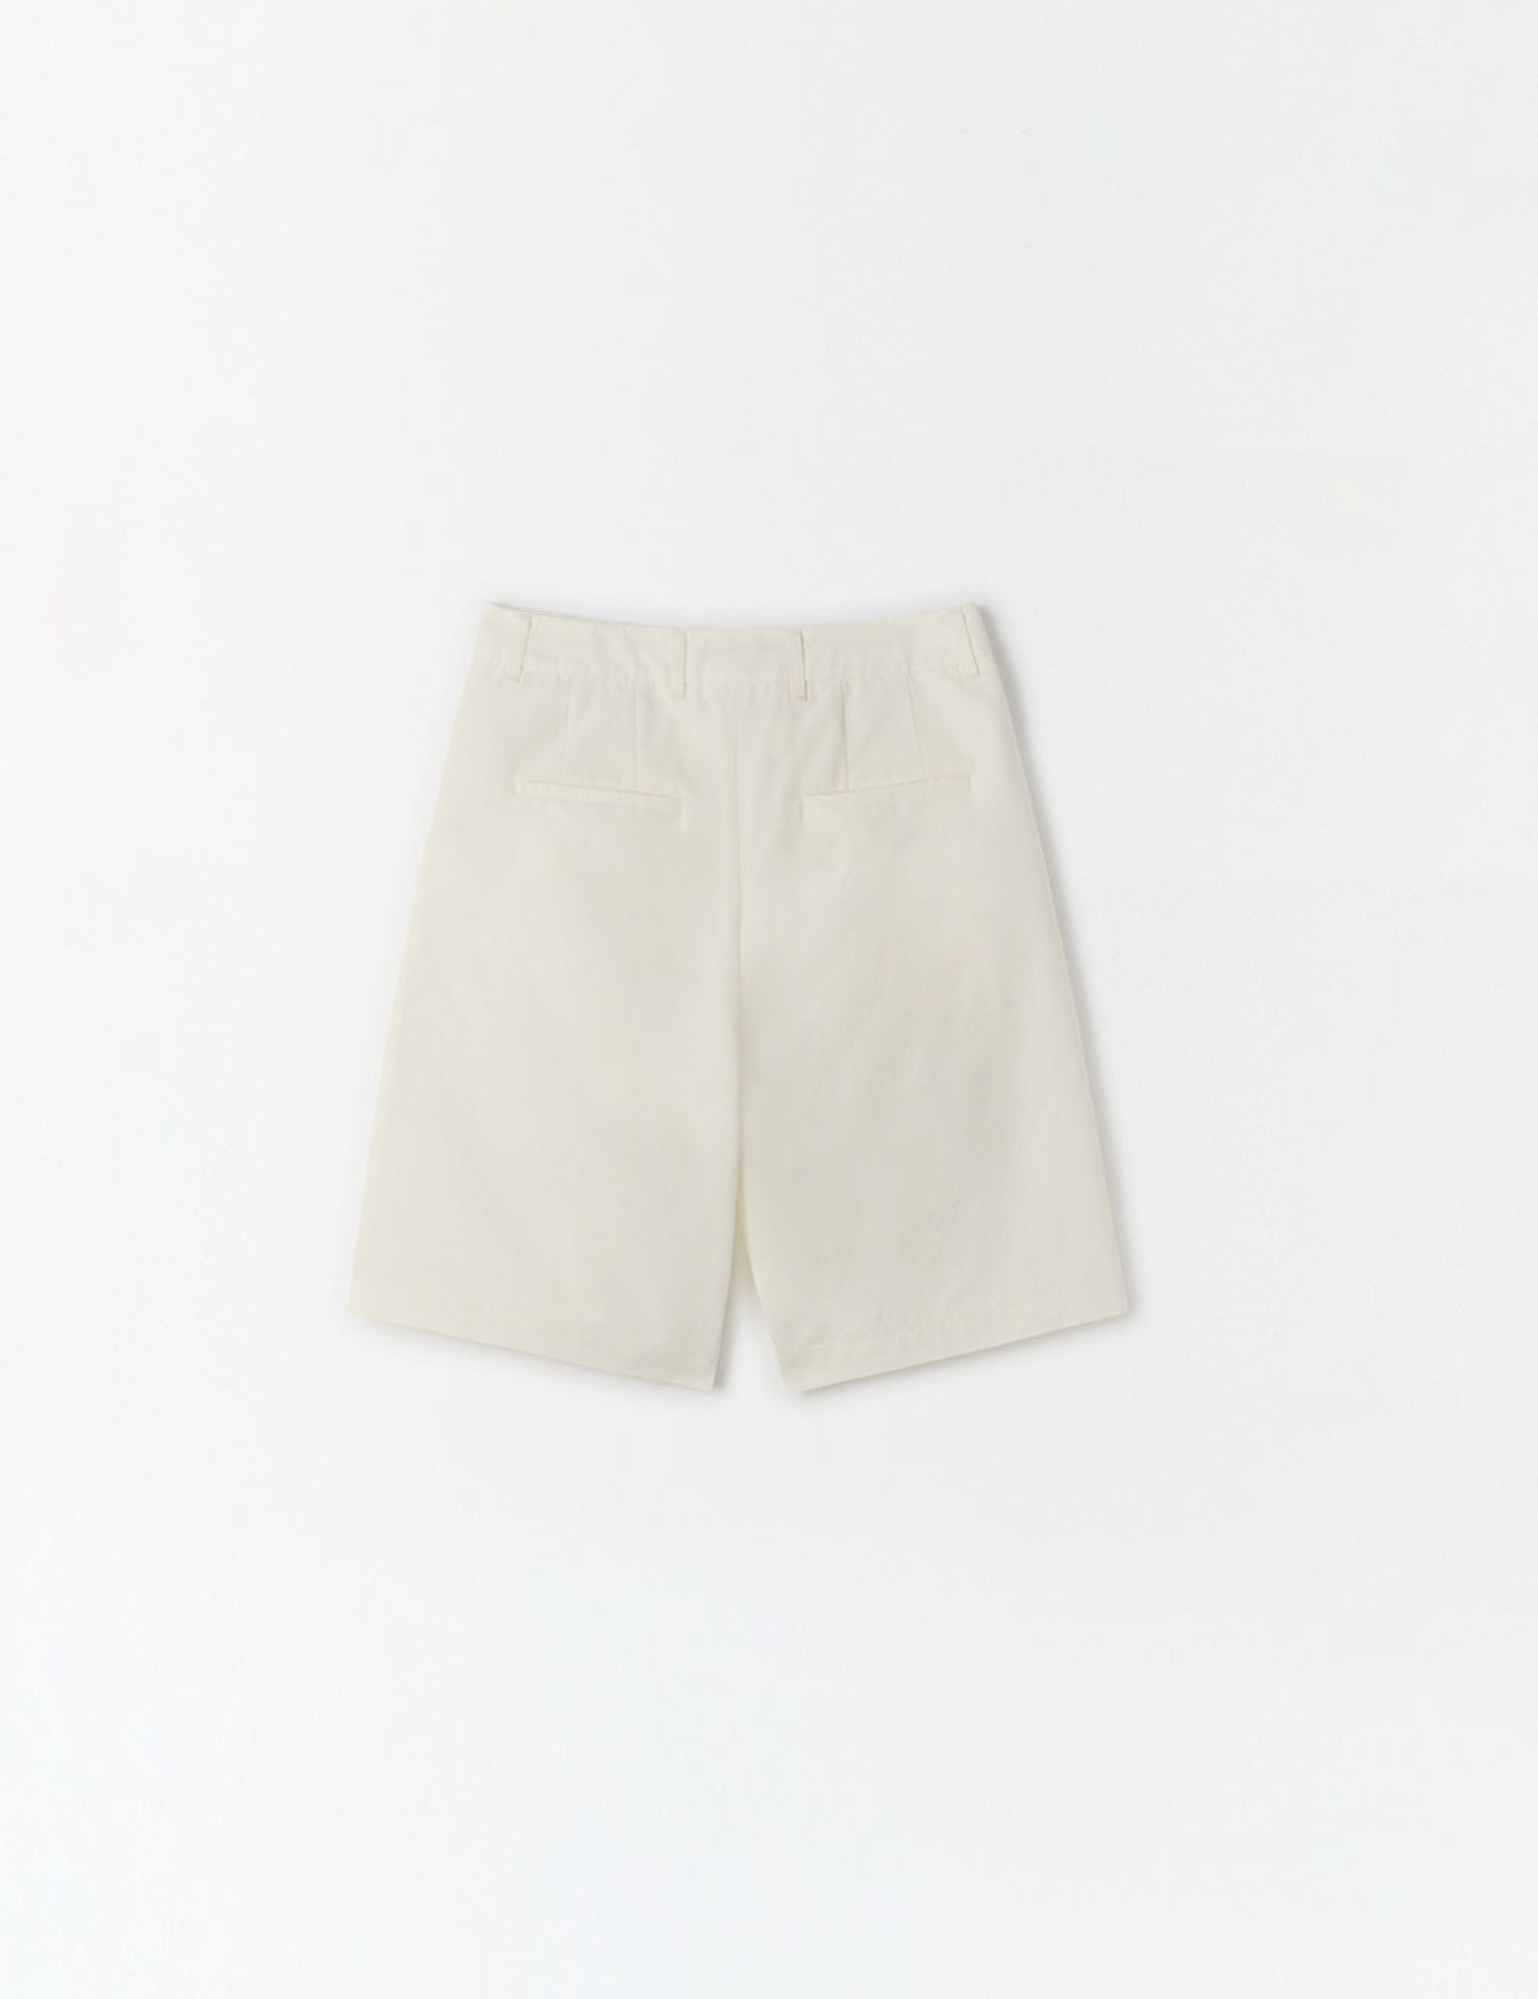 Roji Bermuda Pants (Ivory)